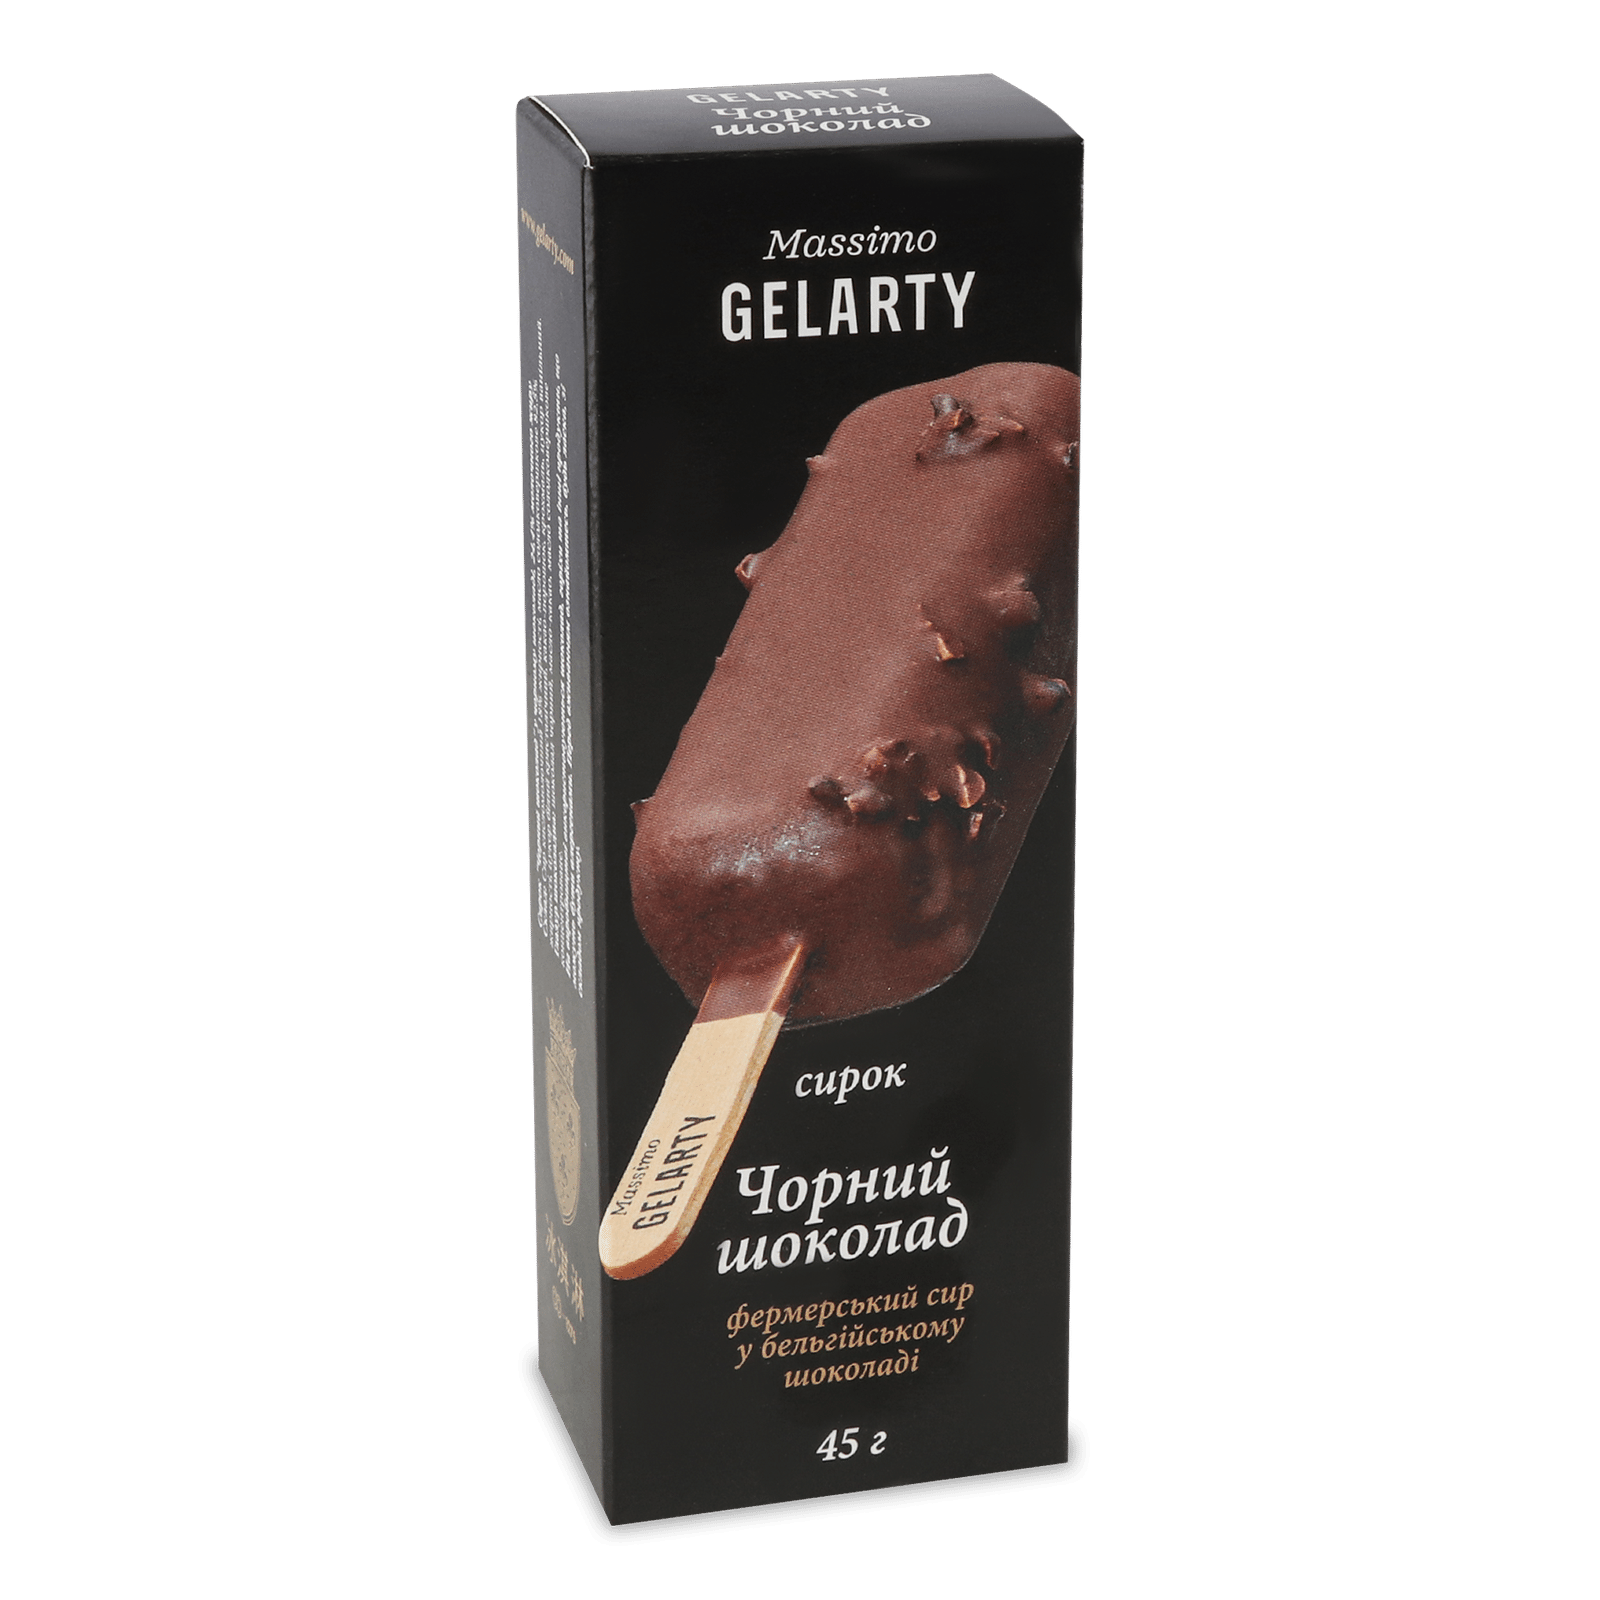 Сирок Gelarty Massimo Чорний шоколад 24,4% - 1